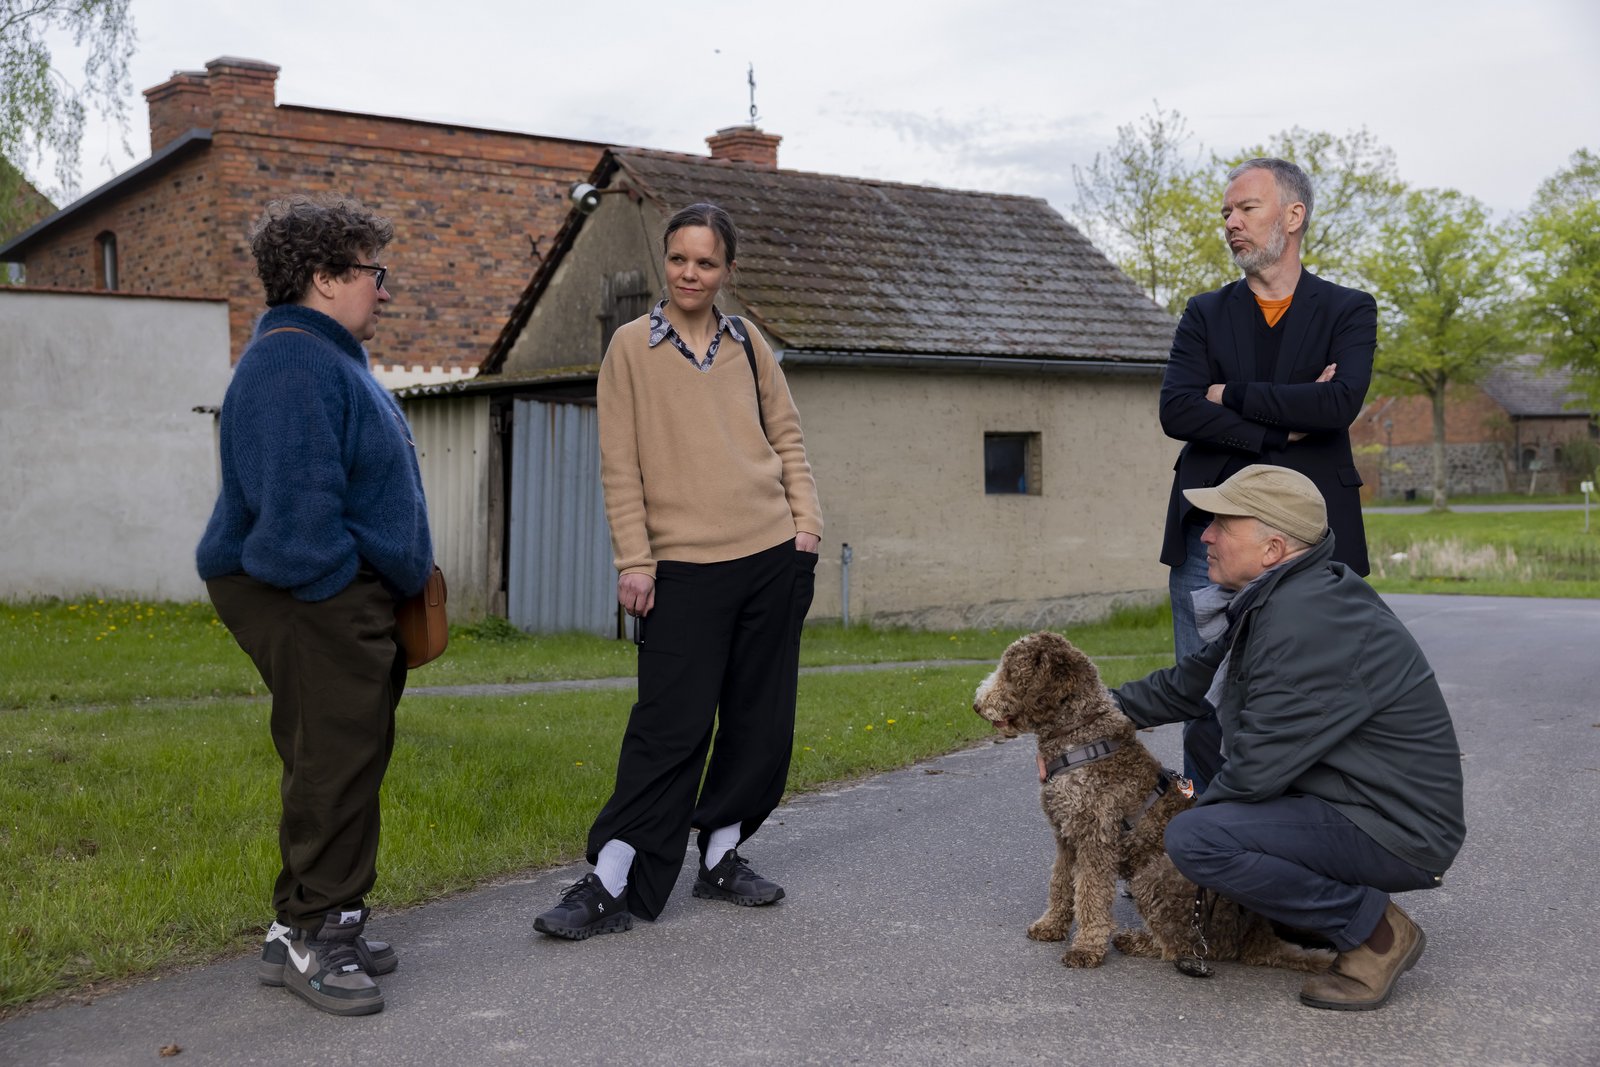 Judith Hopf, Lea Schleiffenbaum, Gerrit Gohlke and Florian Zeyfang standing on the street in Sauen